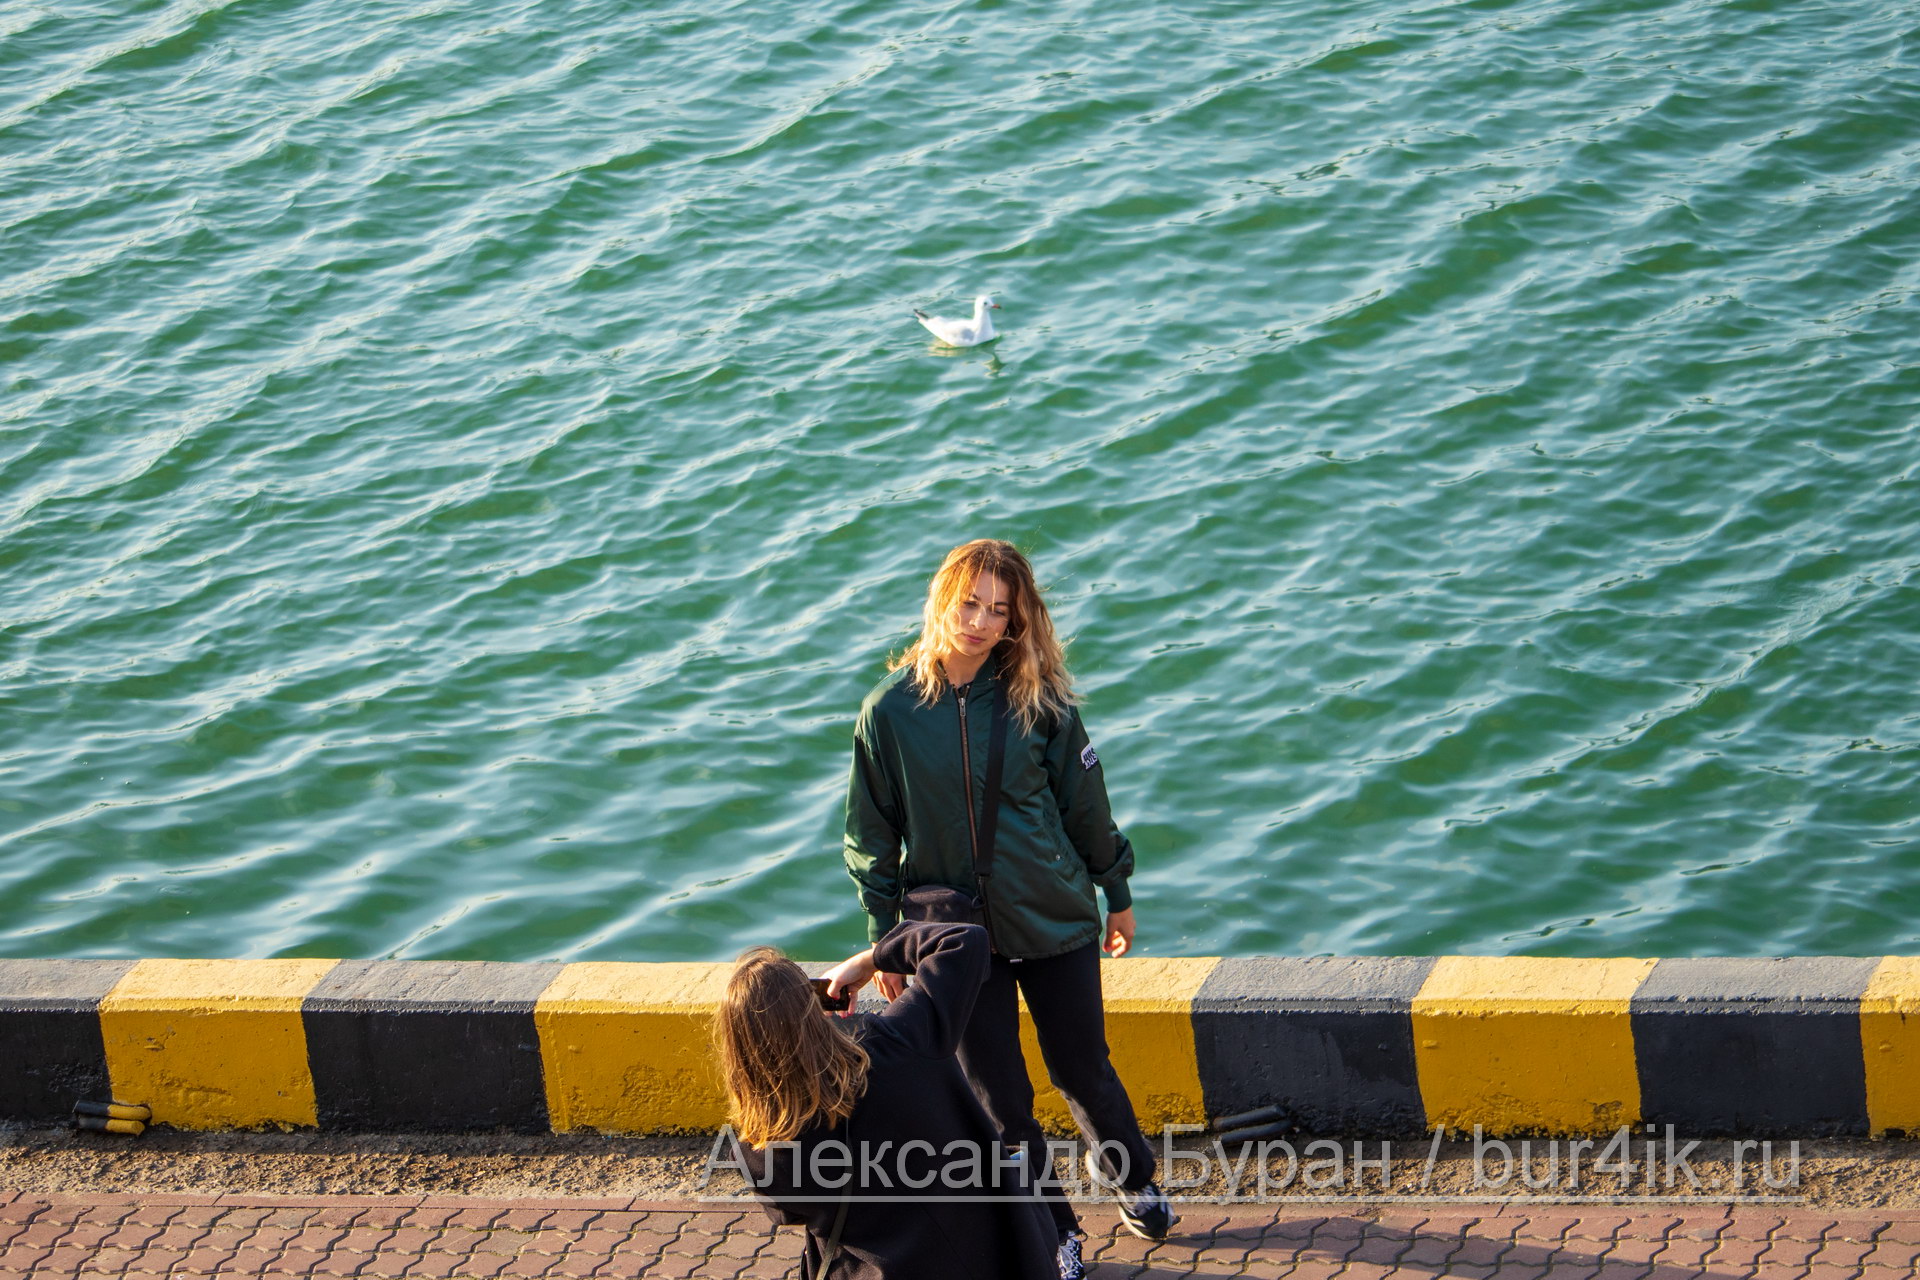 Две девушки фотографируют себя на причале в порту - Украина, Одесса, 09,11,2019